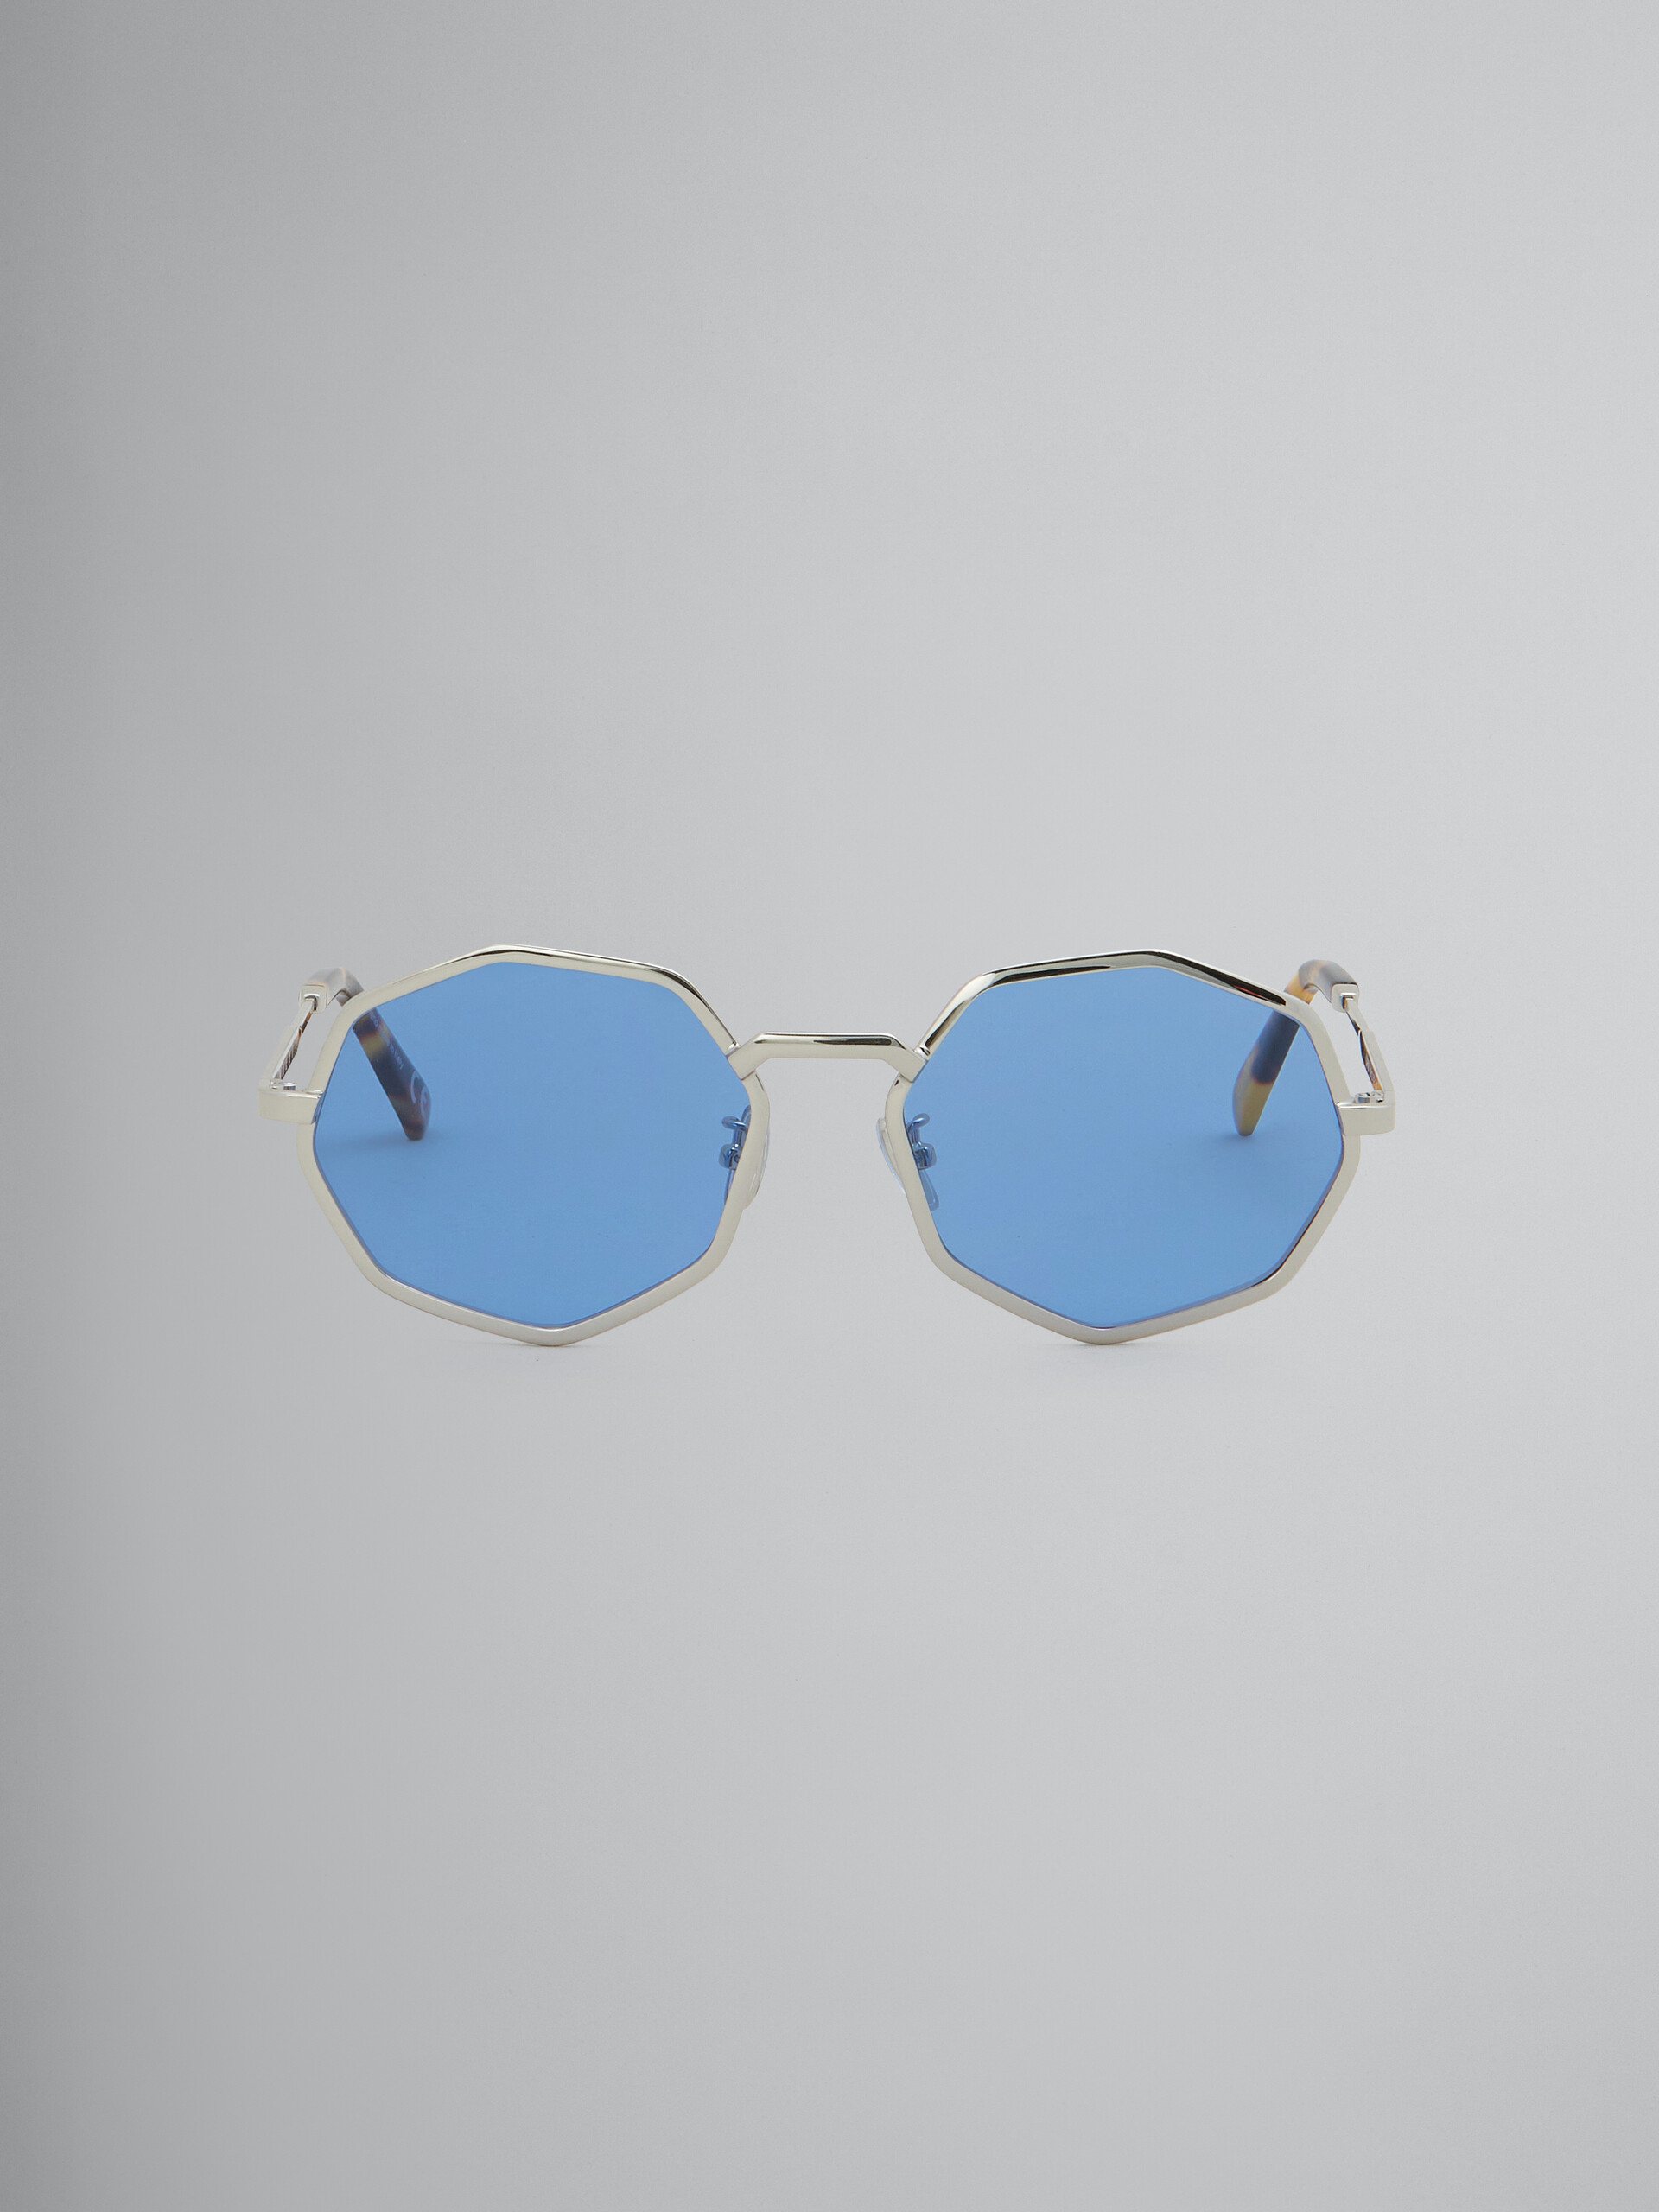 Pulpit Rock silver metal octagonal sunglasses - Optical - Image 1